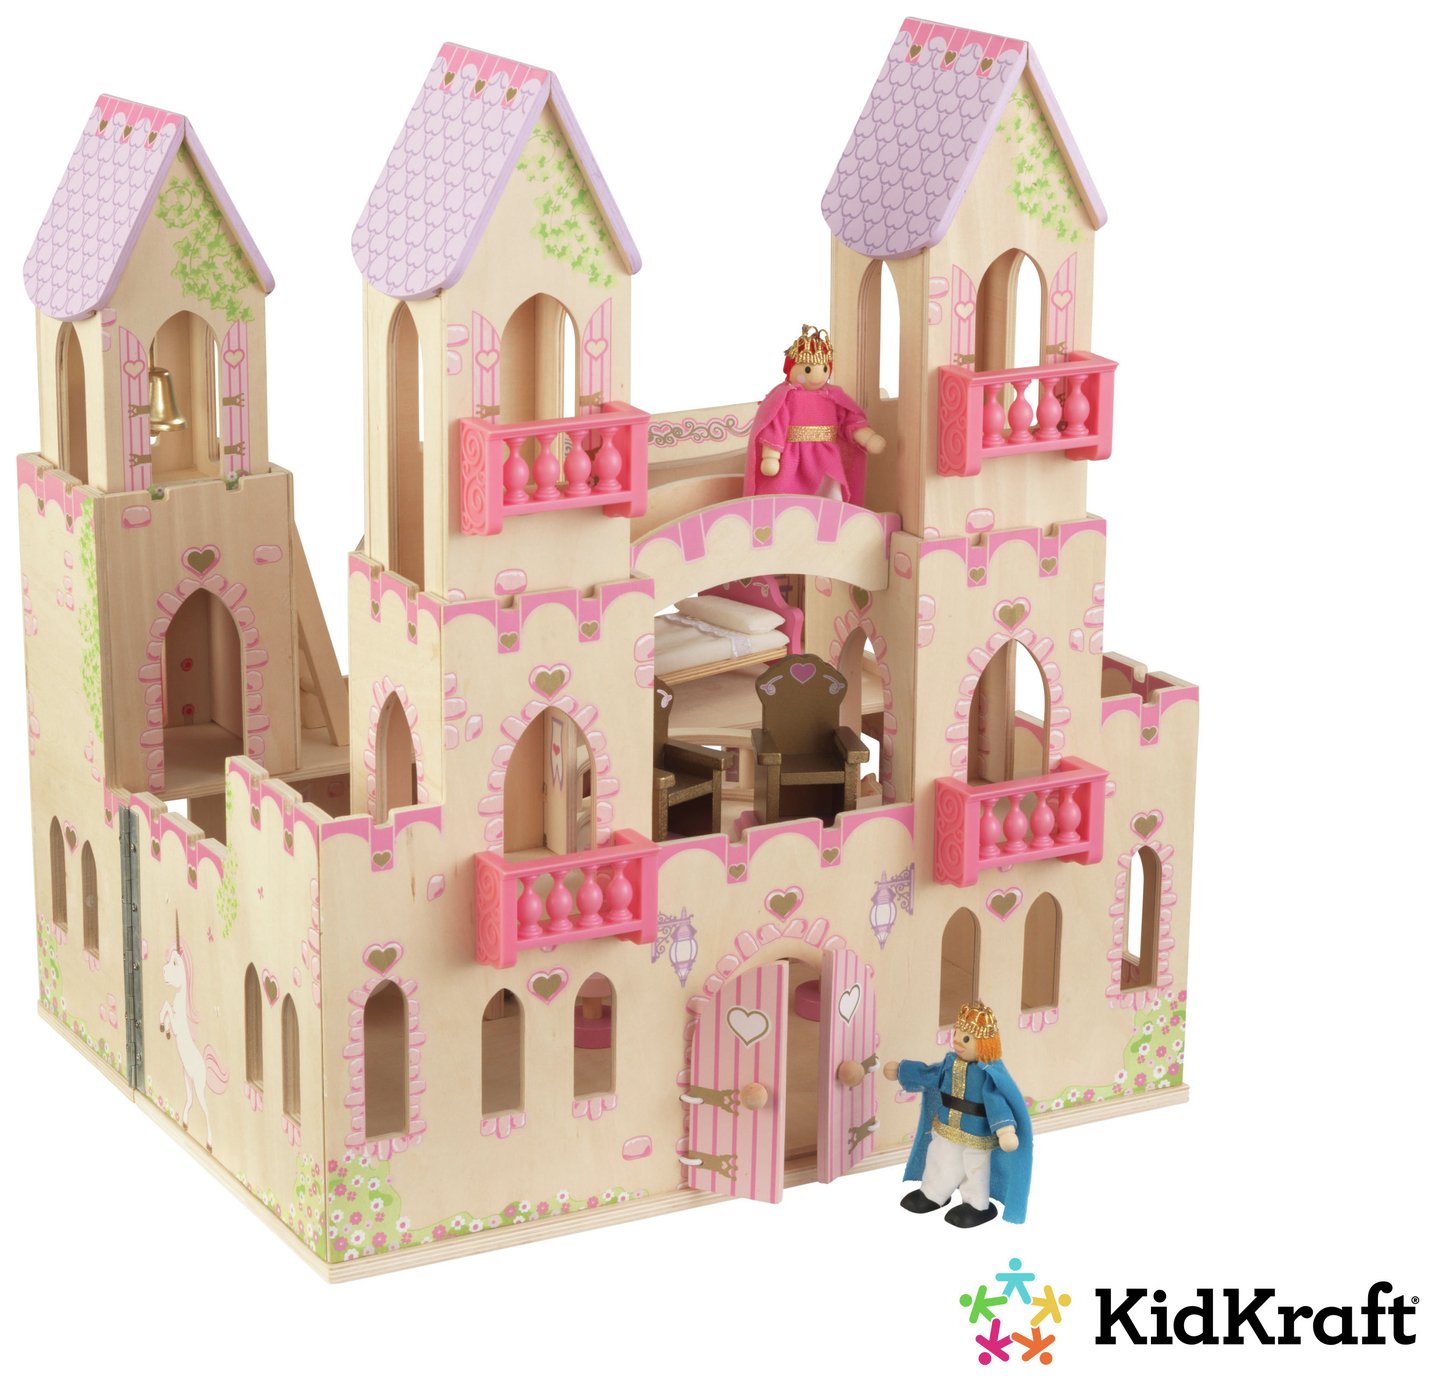 KidKraft Princess Castle Wooden Dolls House Review